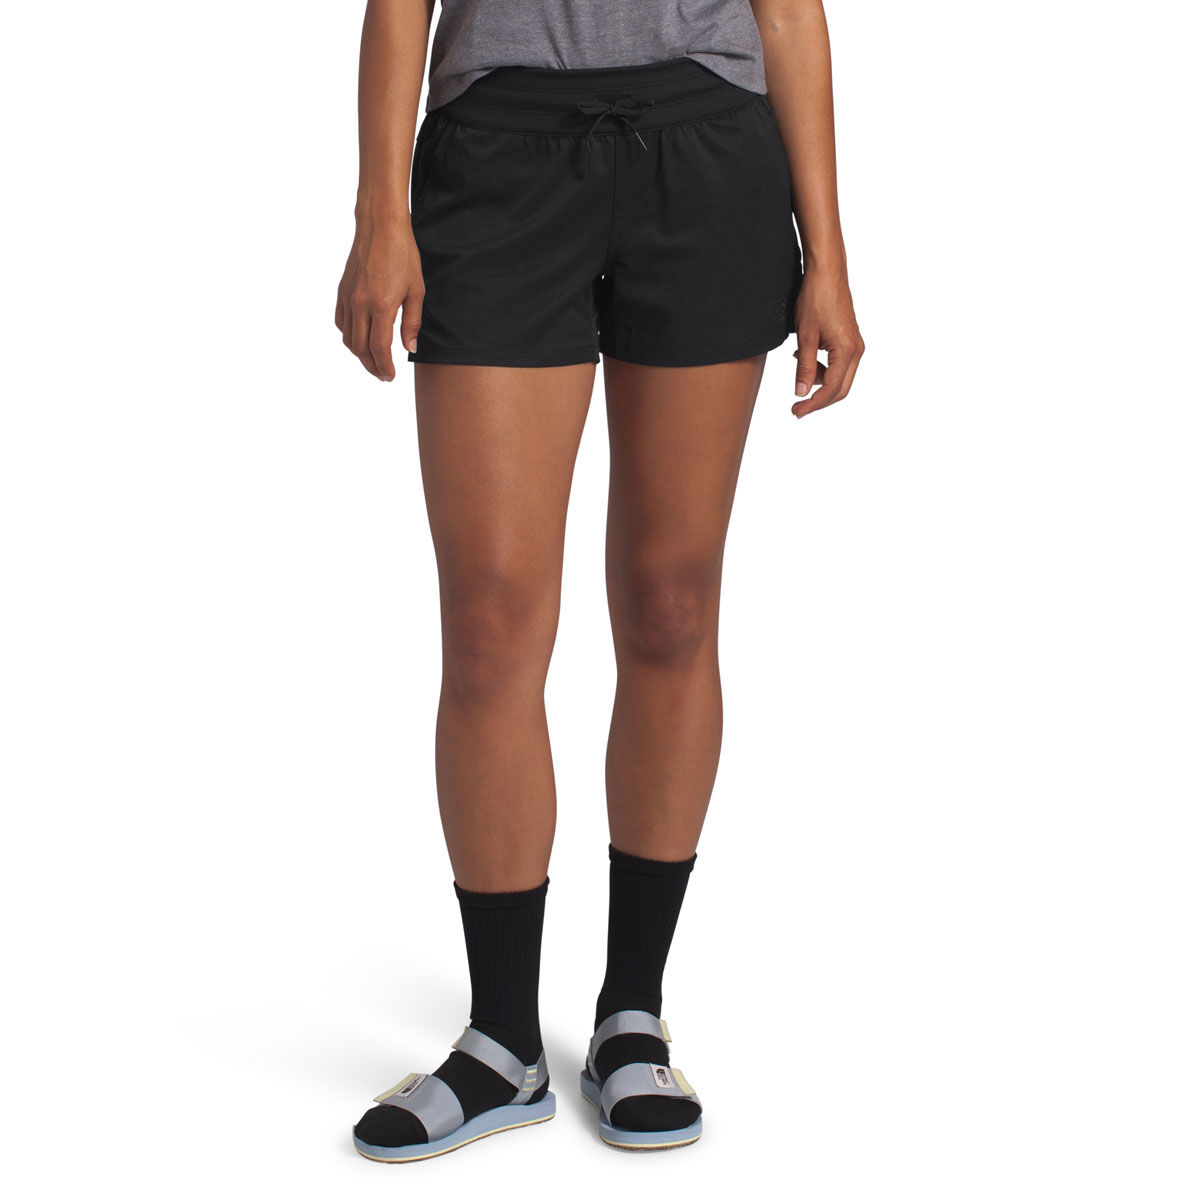 Black 3 Sporty Shorts - XS/L/XL/2XL only – Liberte Lifestyles